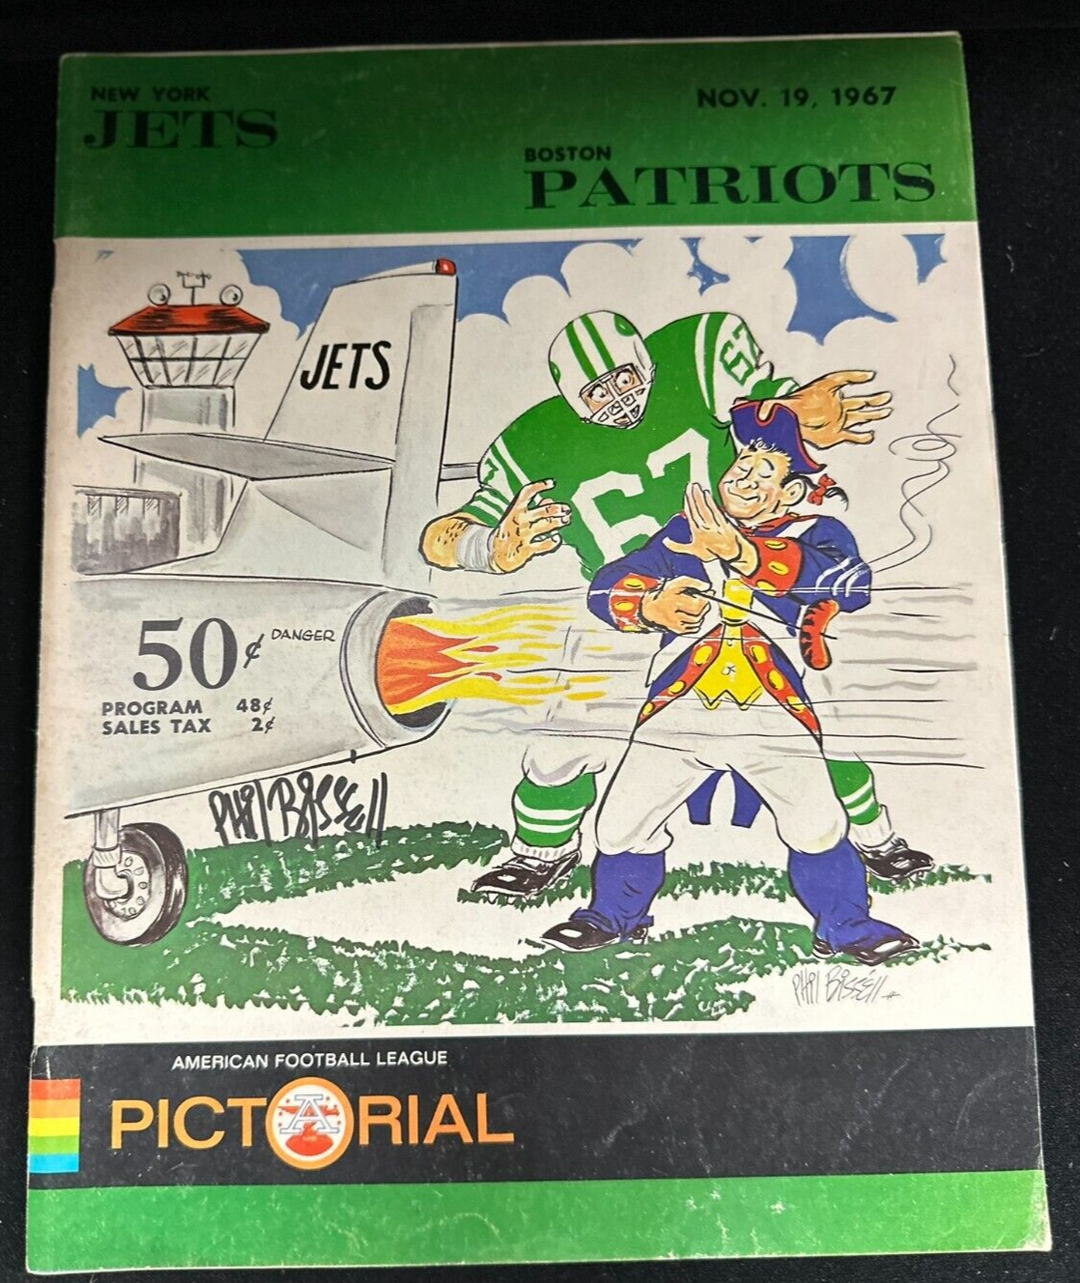 Phil Bissell Autographed Nov 19, 1967 Boston Patriots Vs Jets Program AFL